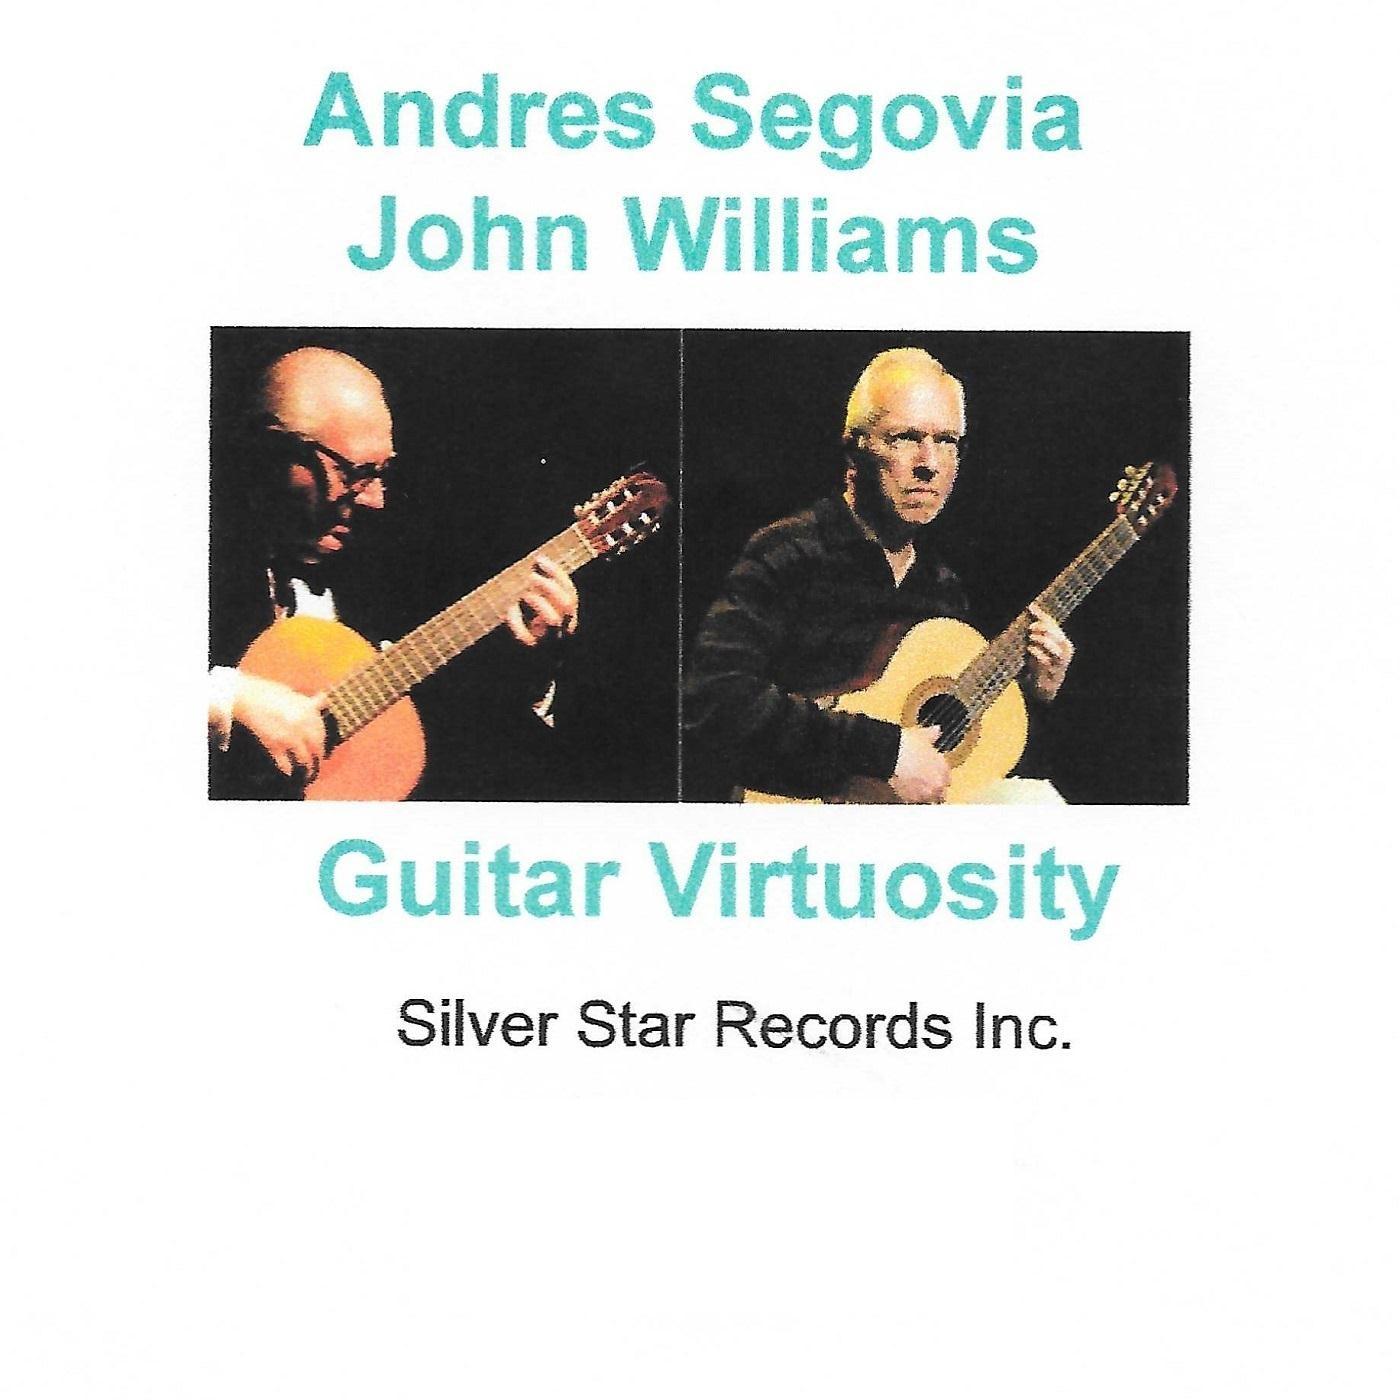 Guitar Virtuosity